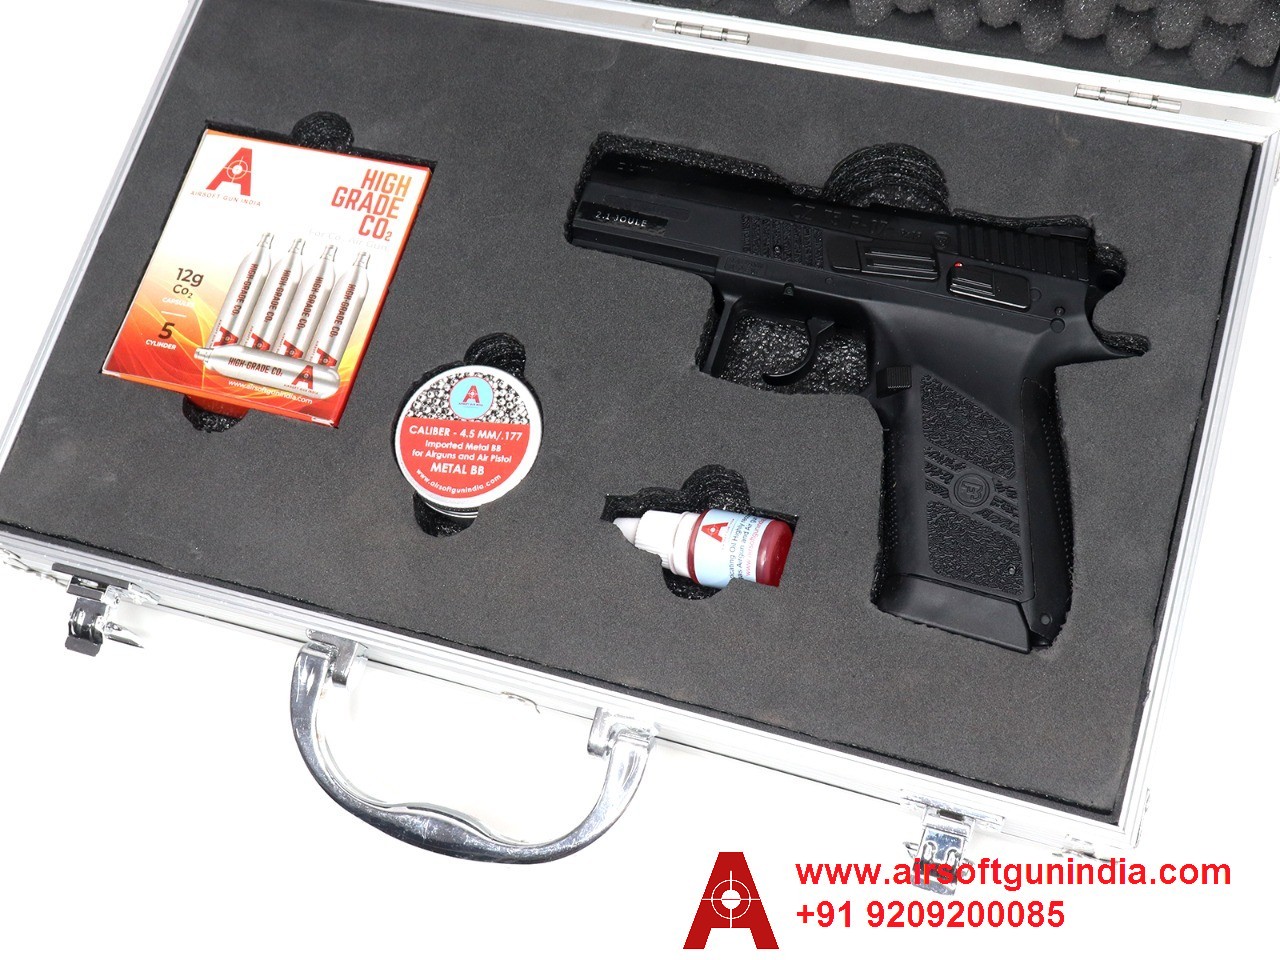 Customized Storage Metal Gun Box For CZ 75 P-07 Duty CO2 BB Blowback Pistol By Airsoft Gun India